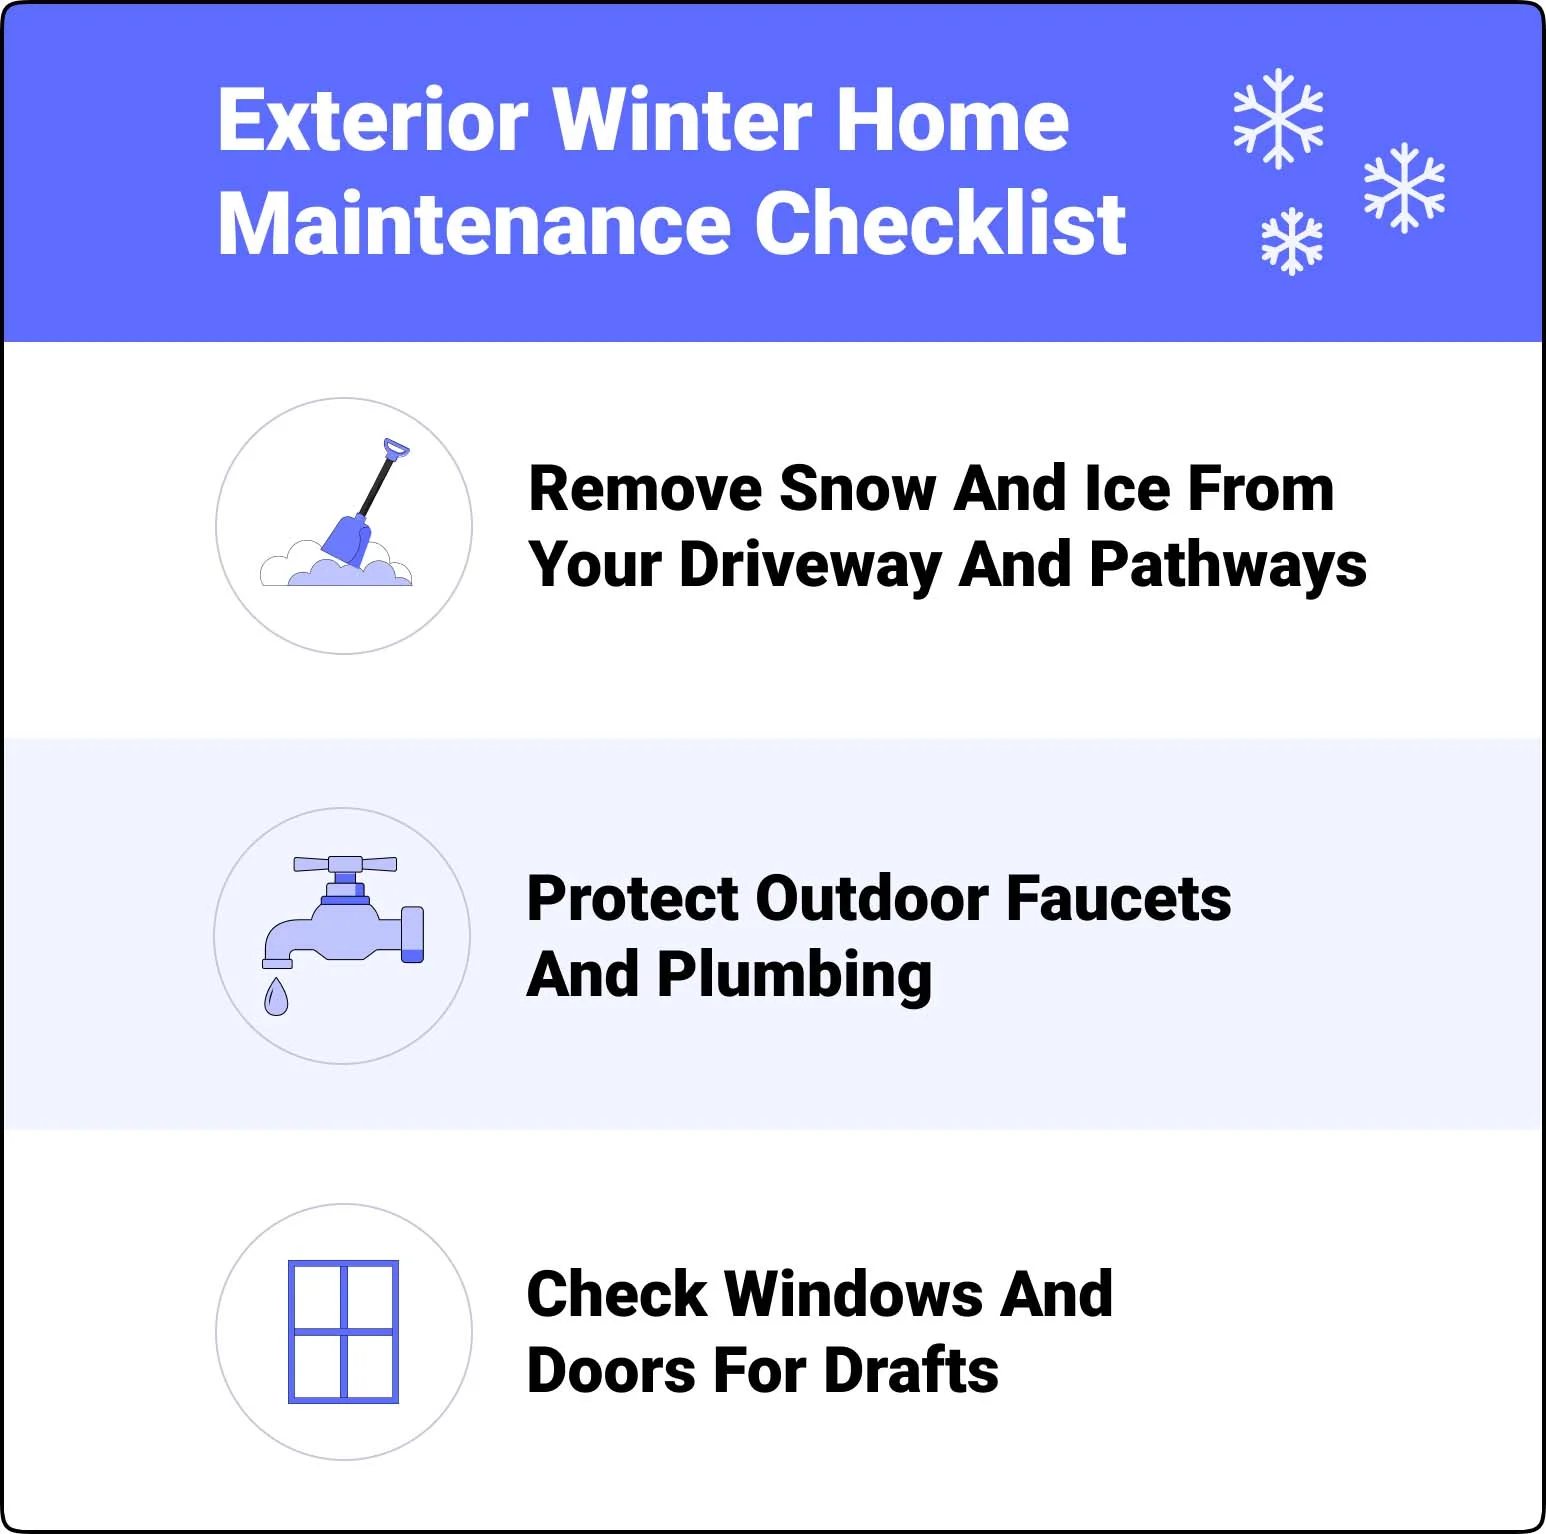 Exterior Winter Home Maintenance Checklist